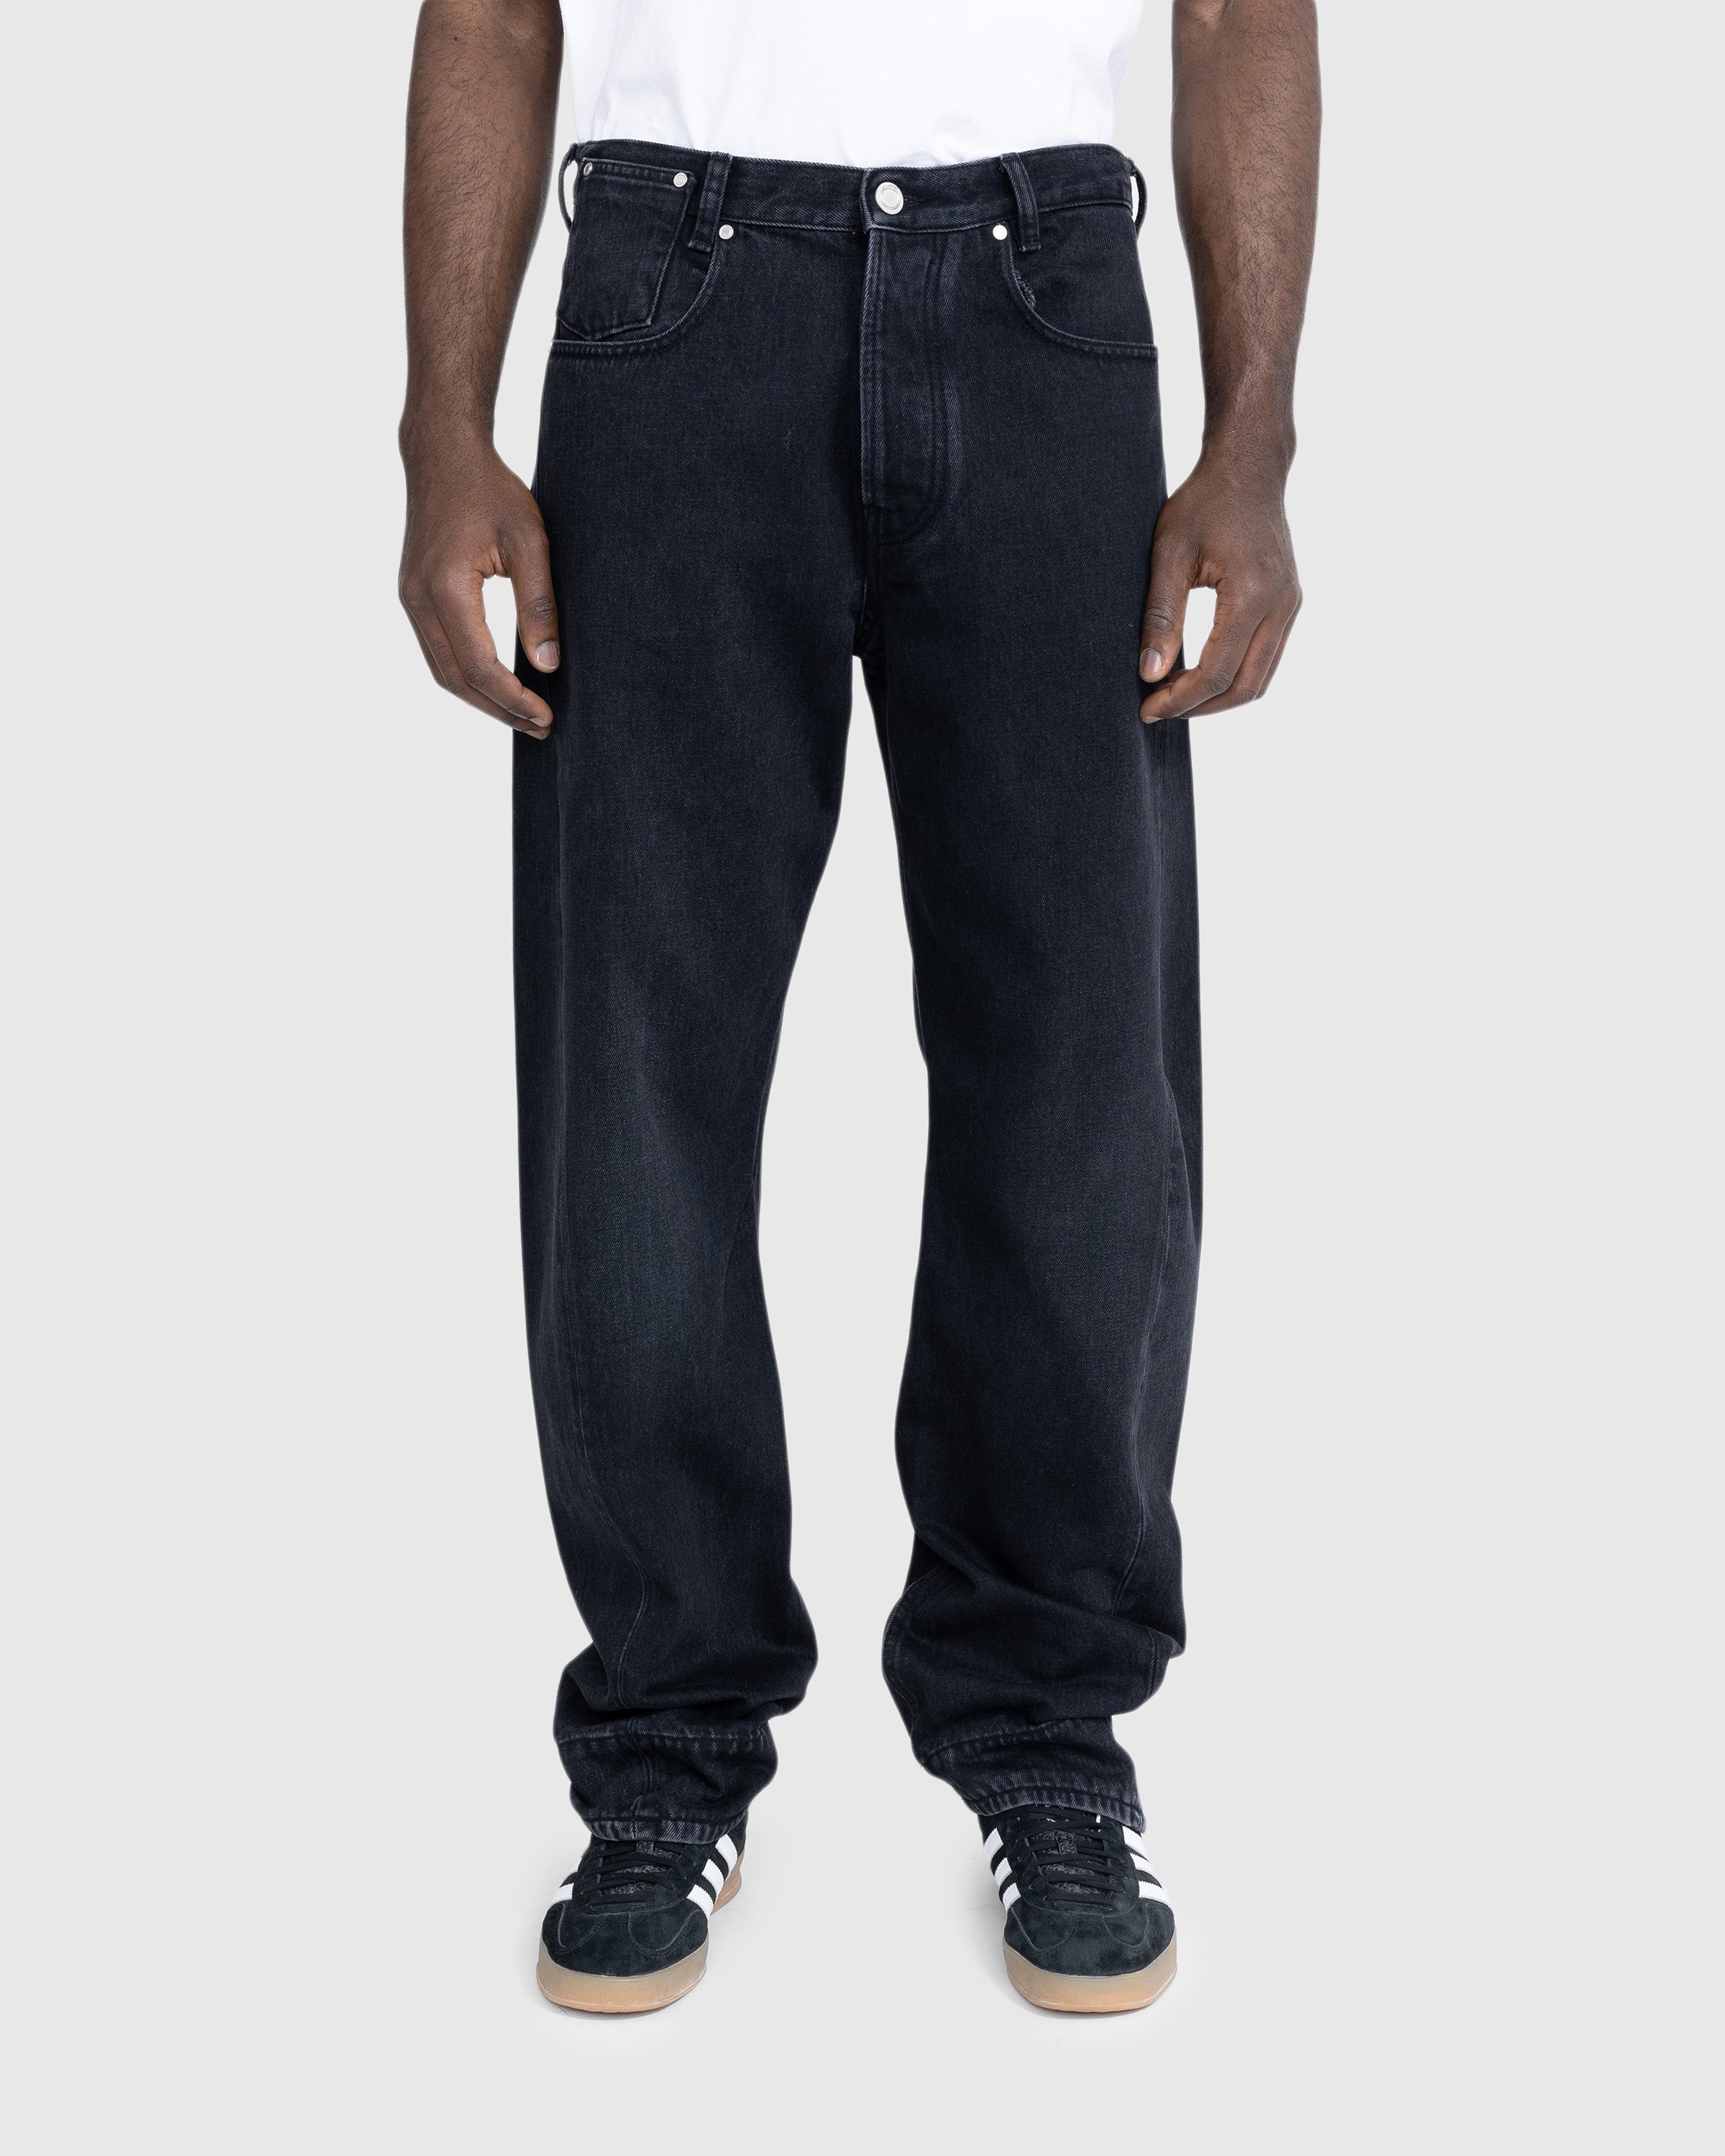 Trussardi - Five-Pocket Twisted Tapered Jeans Black Rigid - Clothing - Black - Image 2